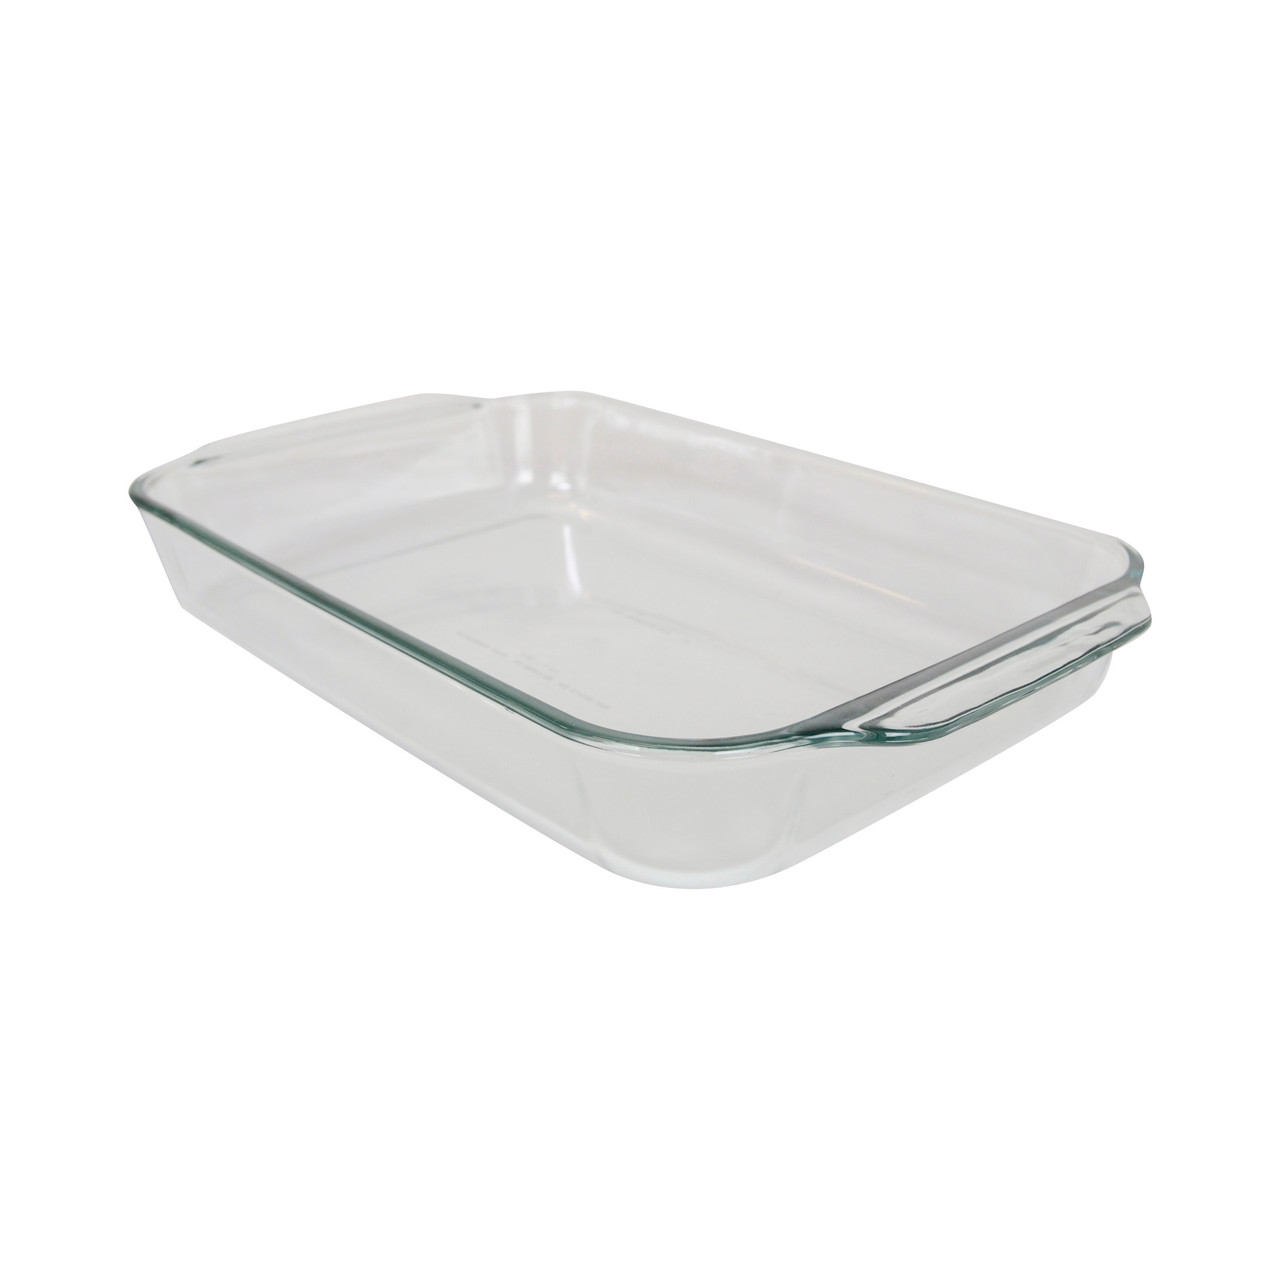 Pyrex Basics 3 Quart Glass Oblong Baking Dish, Clear, 9 x 13